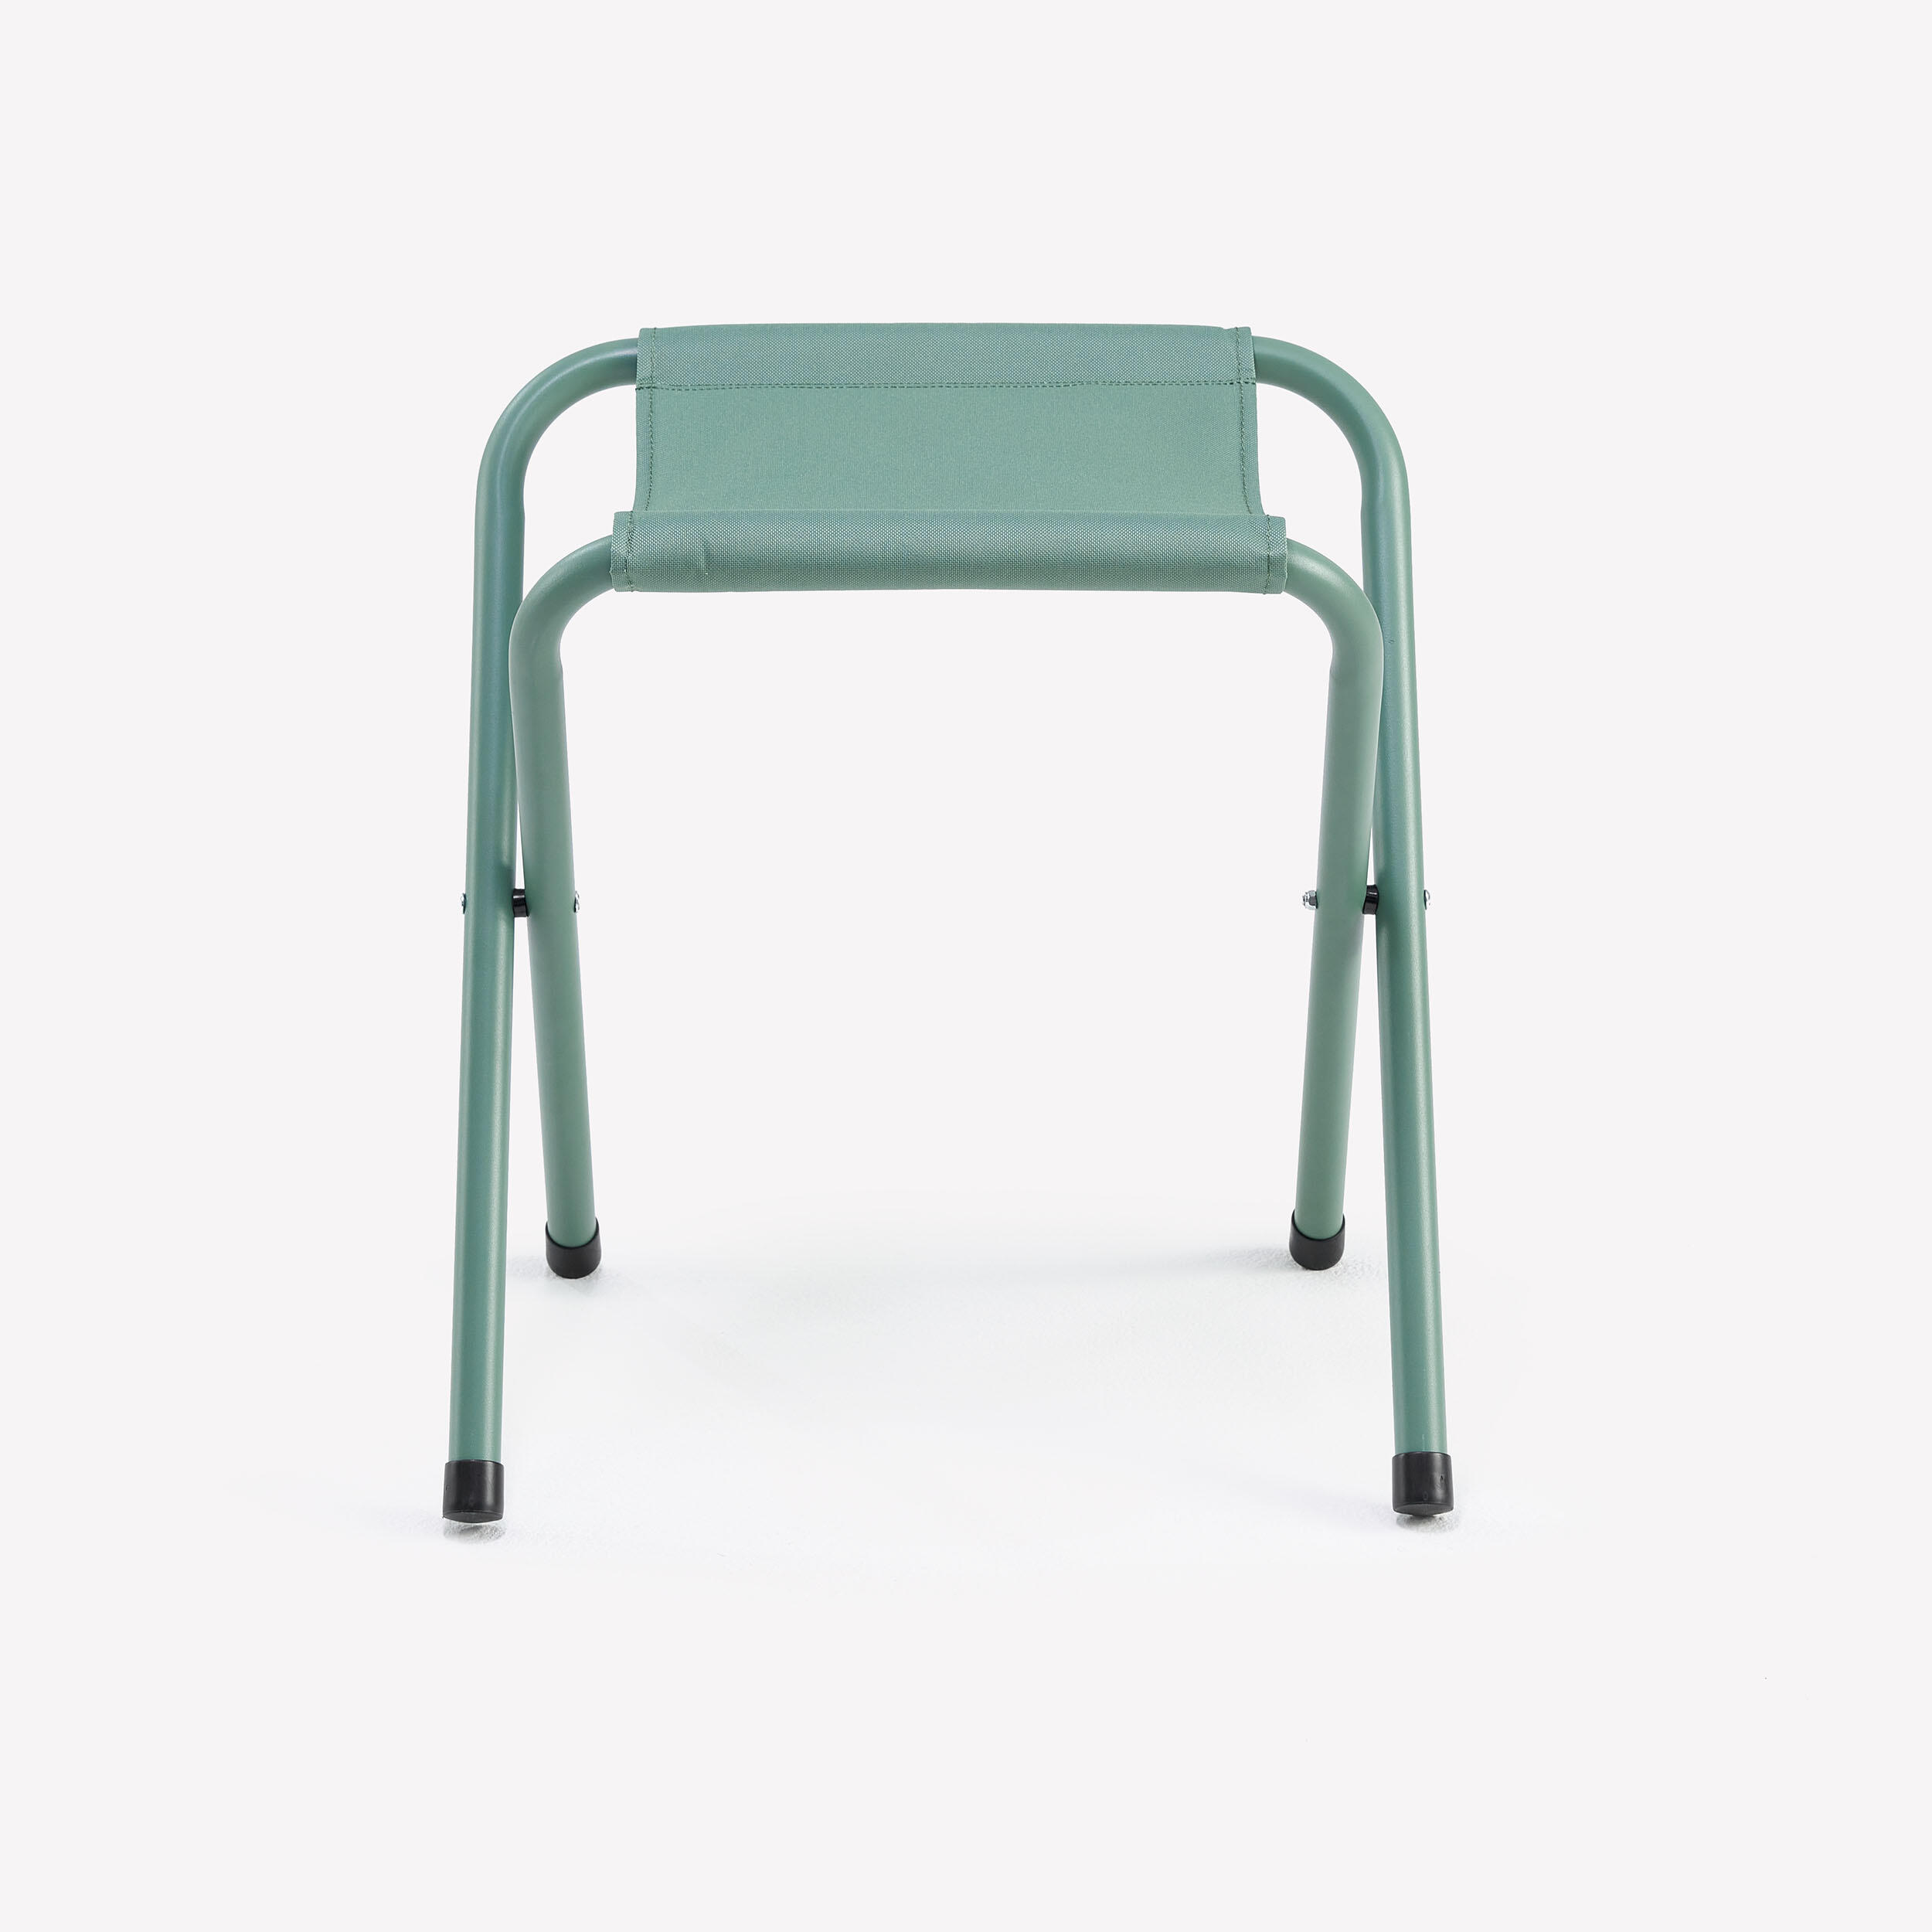 Folding camping stool - green 3/3